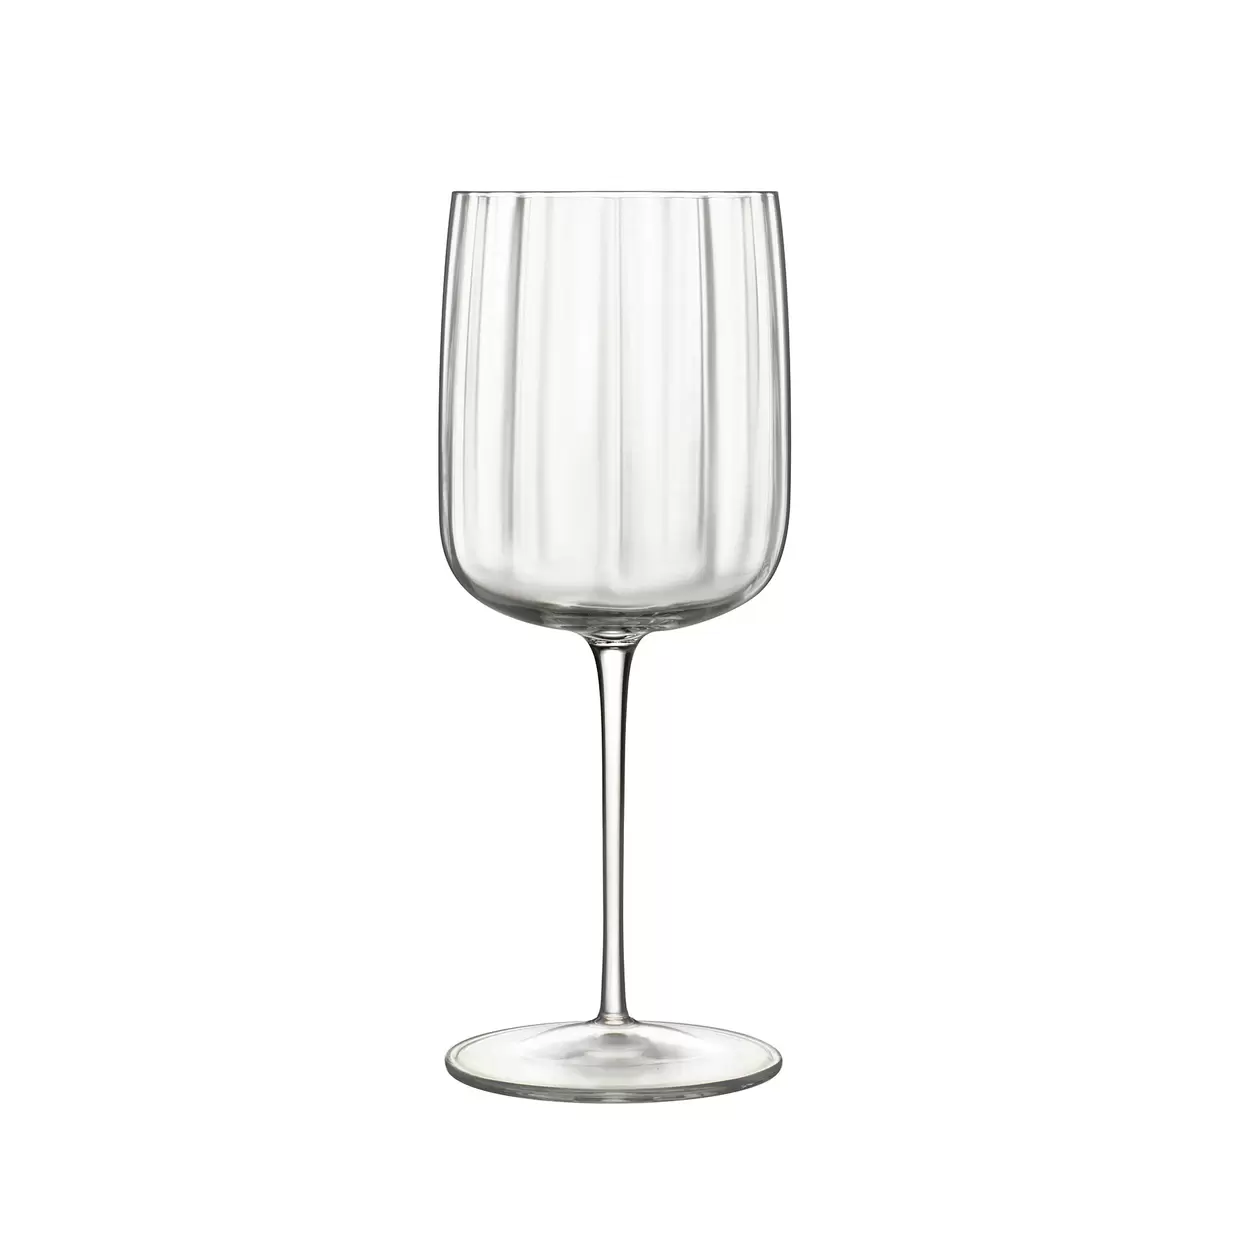 LUIGI BORMIOLI Jazz Spritz cocktailglas 4 stk på tilbud til 399,95 kr. hos Sinnerup